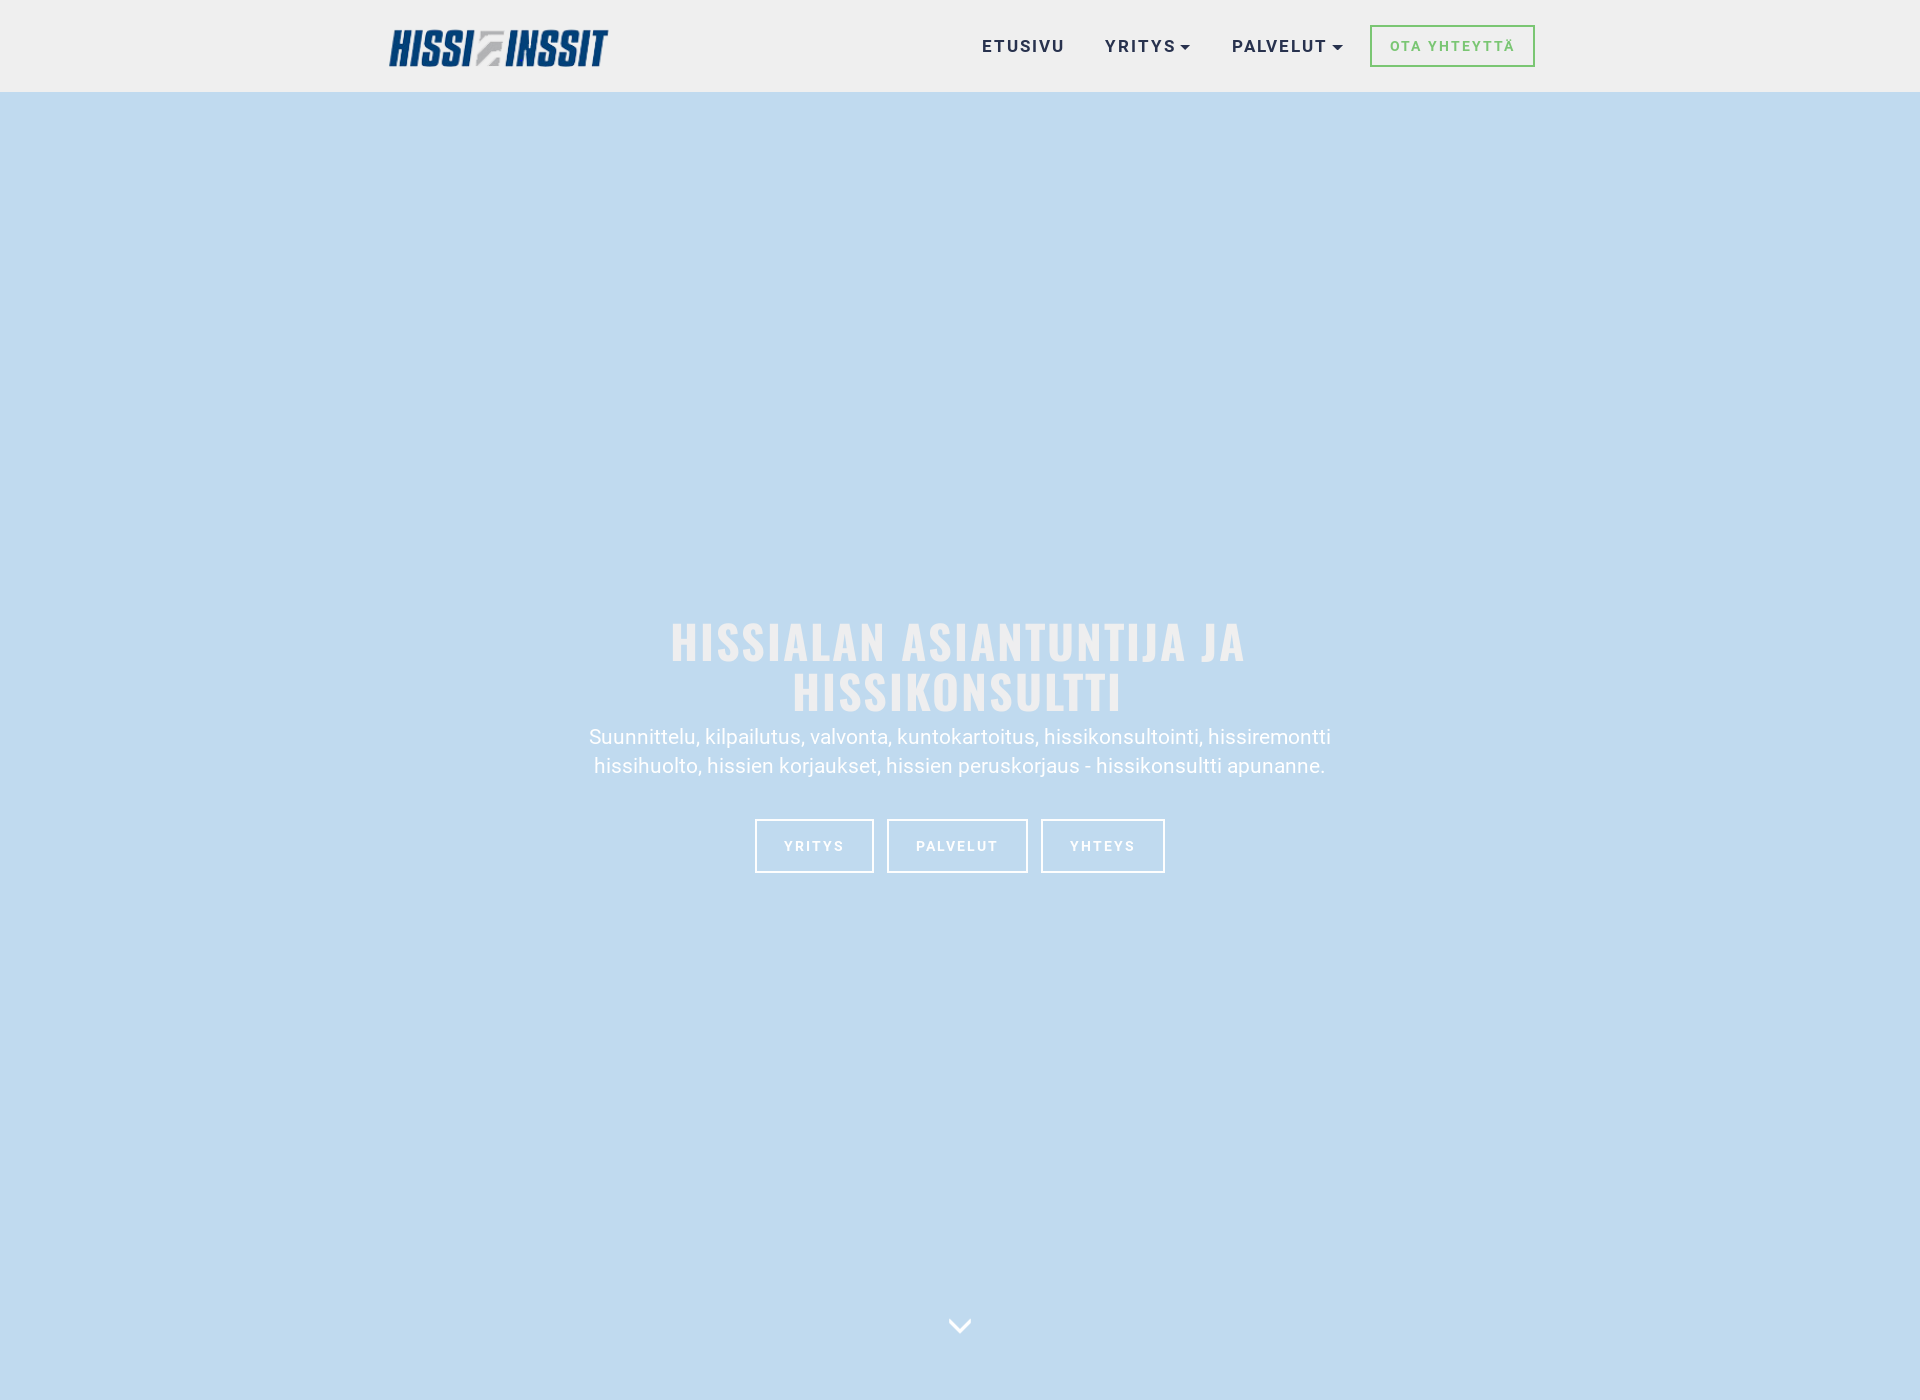 Screenshot for hissi-inssit.fi